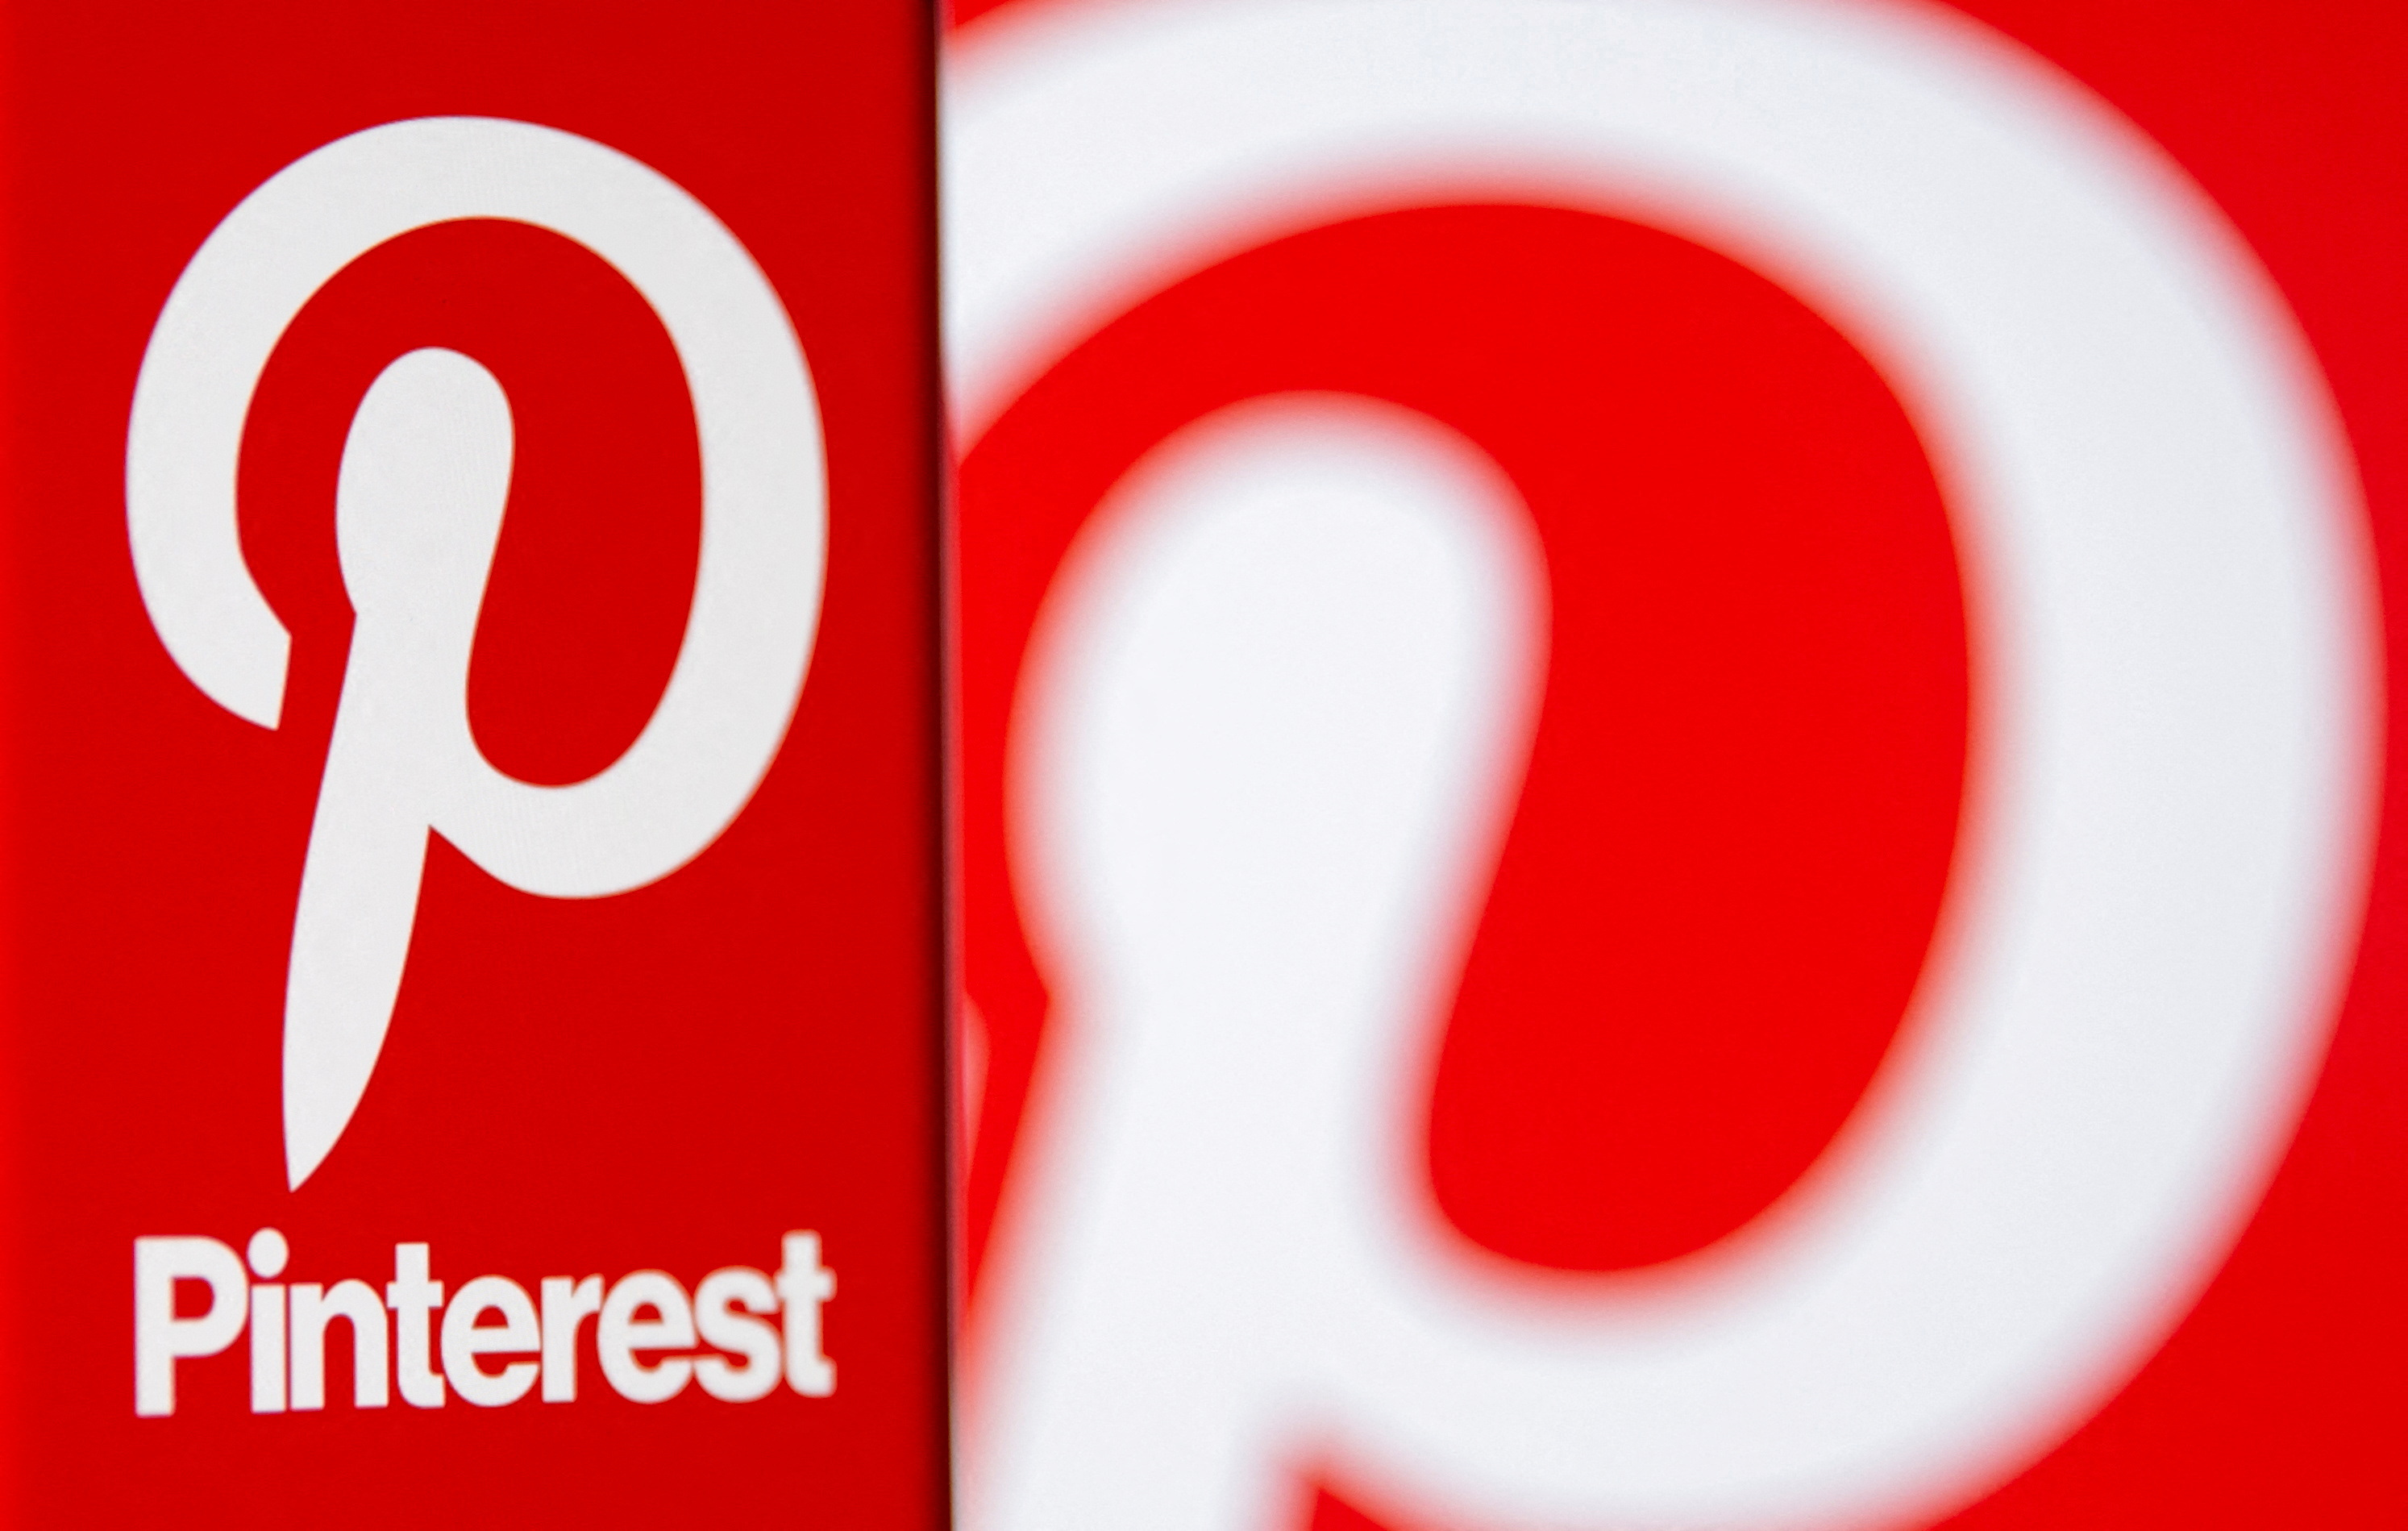 Pinterest sees stronger margins as ad rebound boosts quarterly